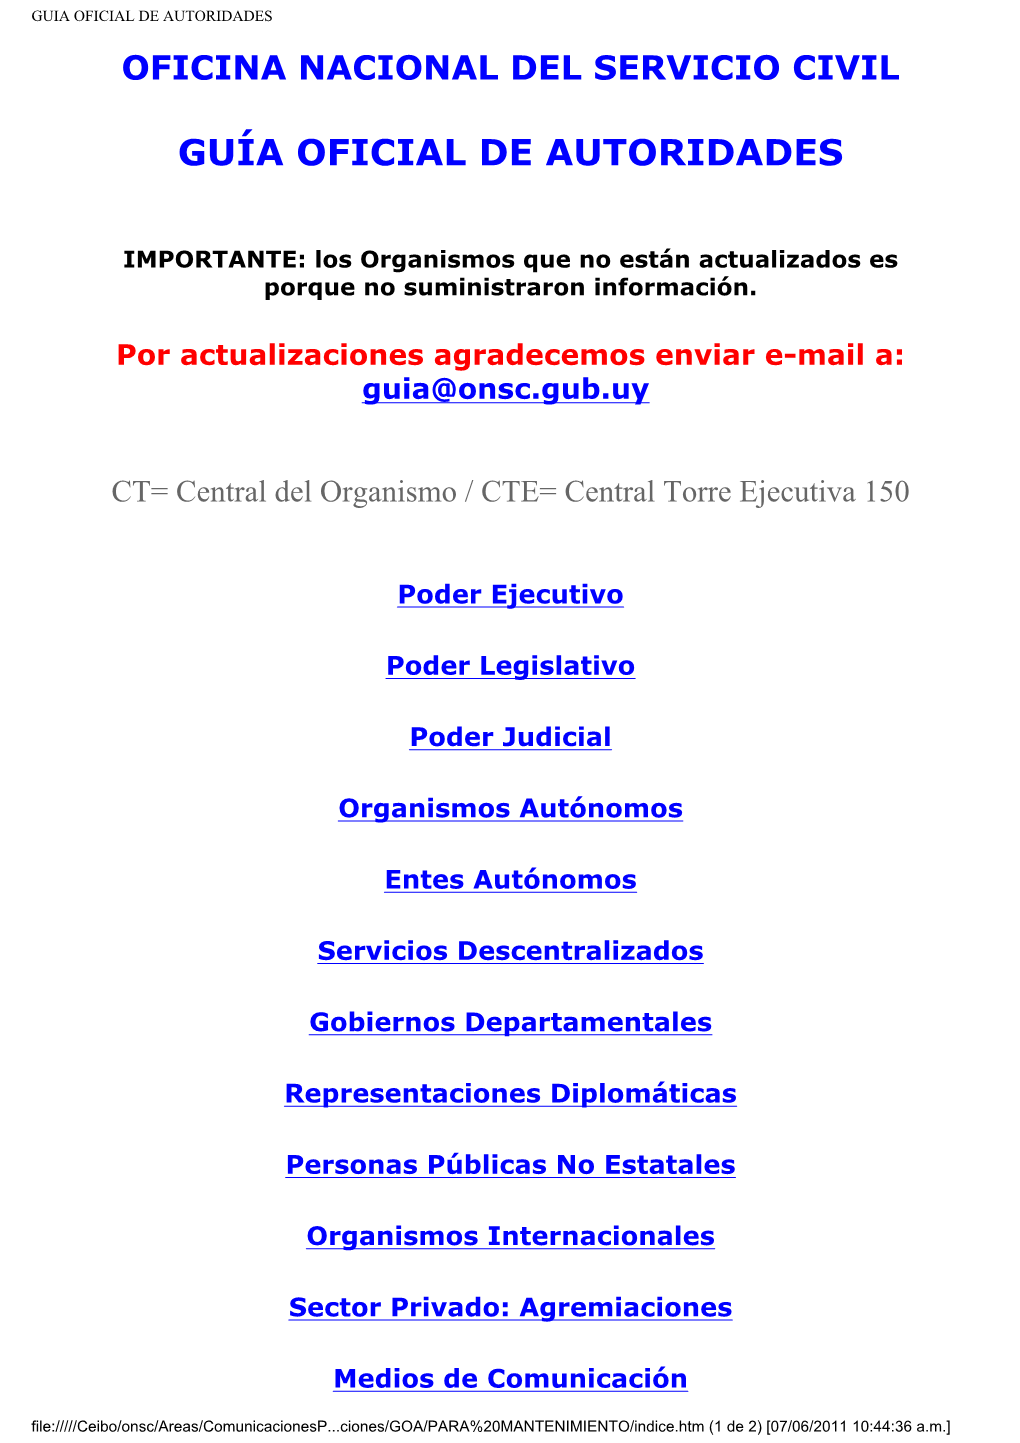 Guia Oficial De Autoridades Oficina Nacional Del Servicio Civil